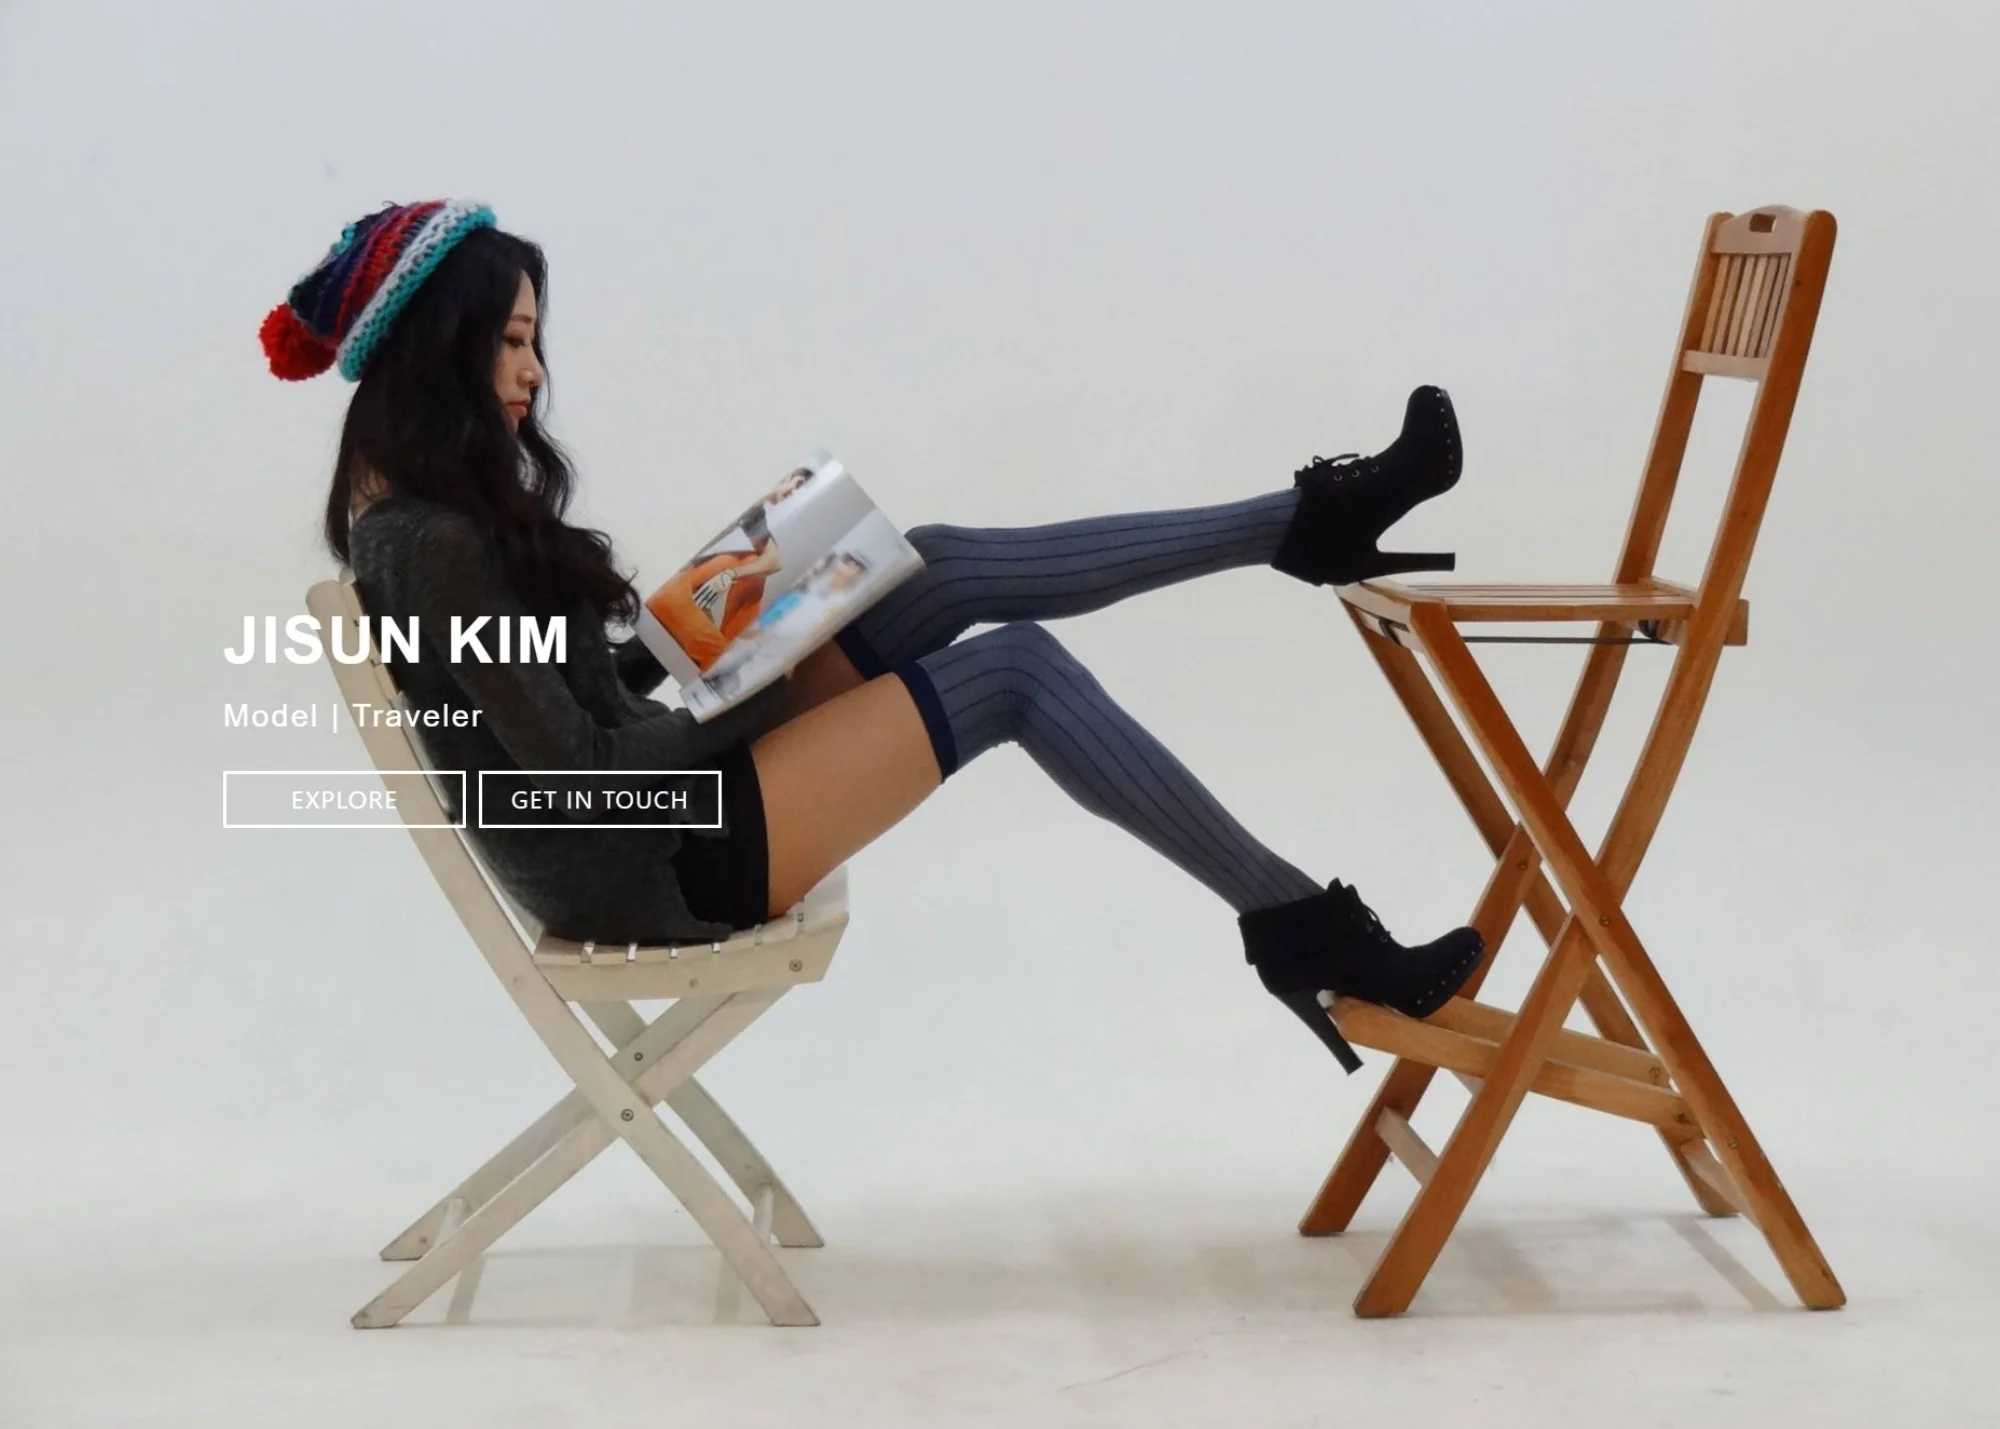 Jisun Kim Official Website